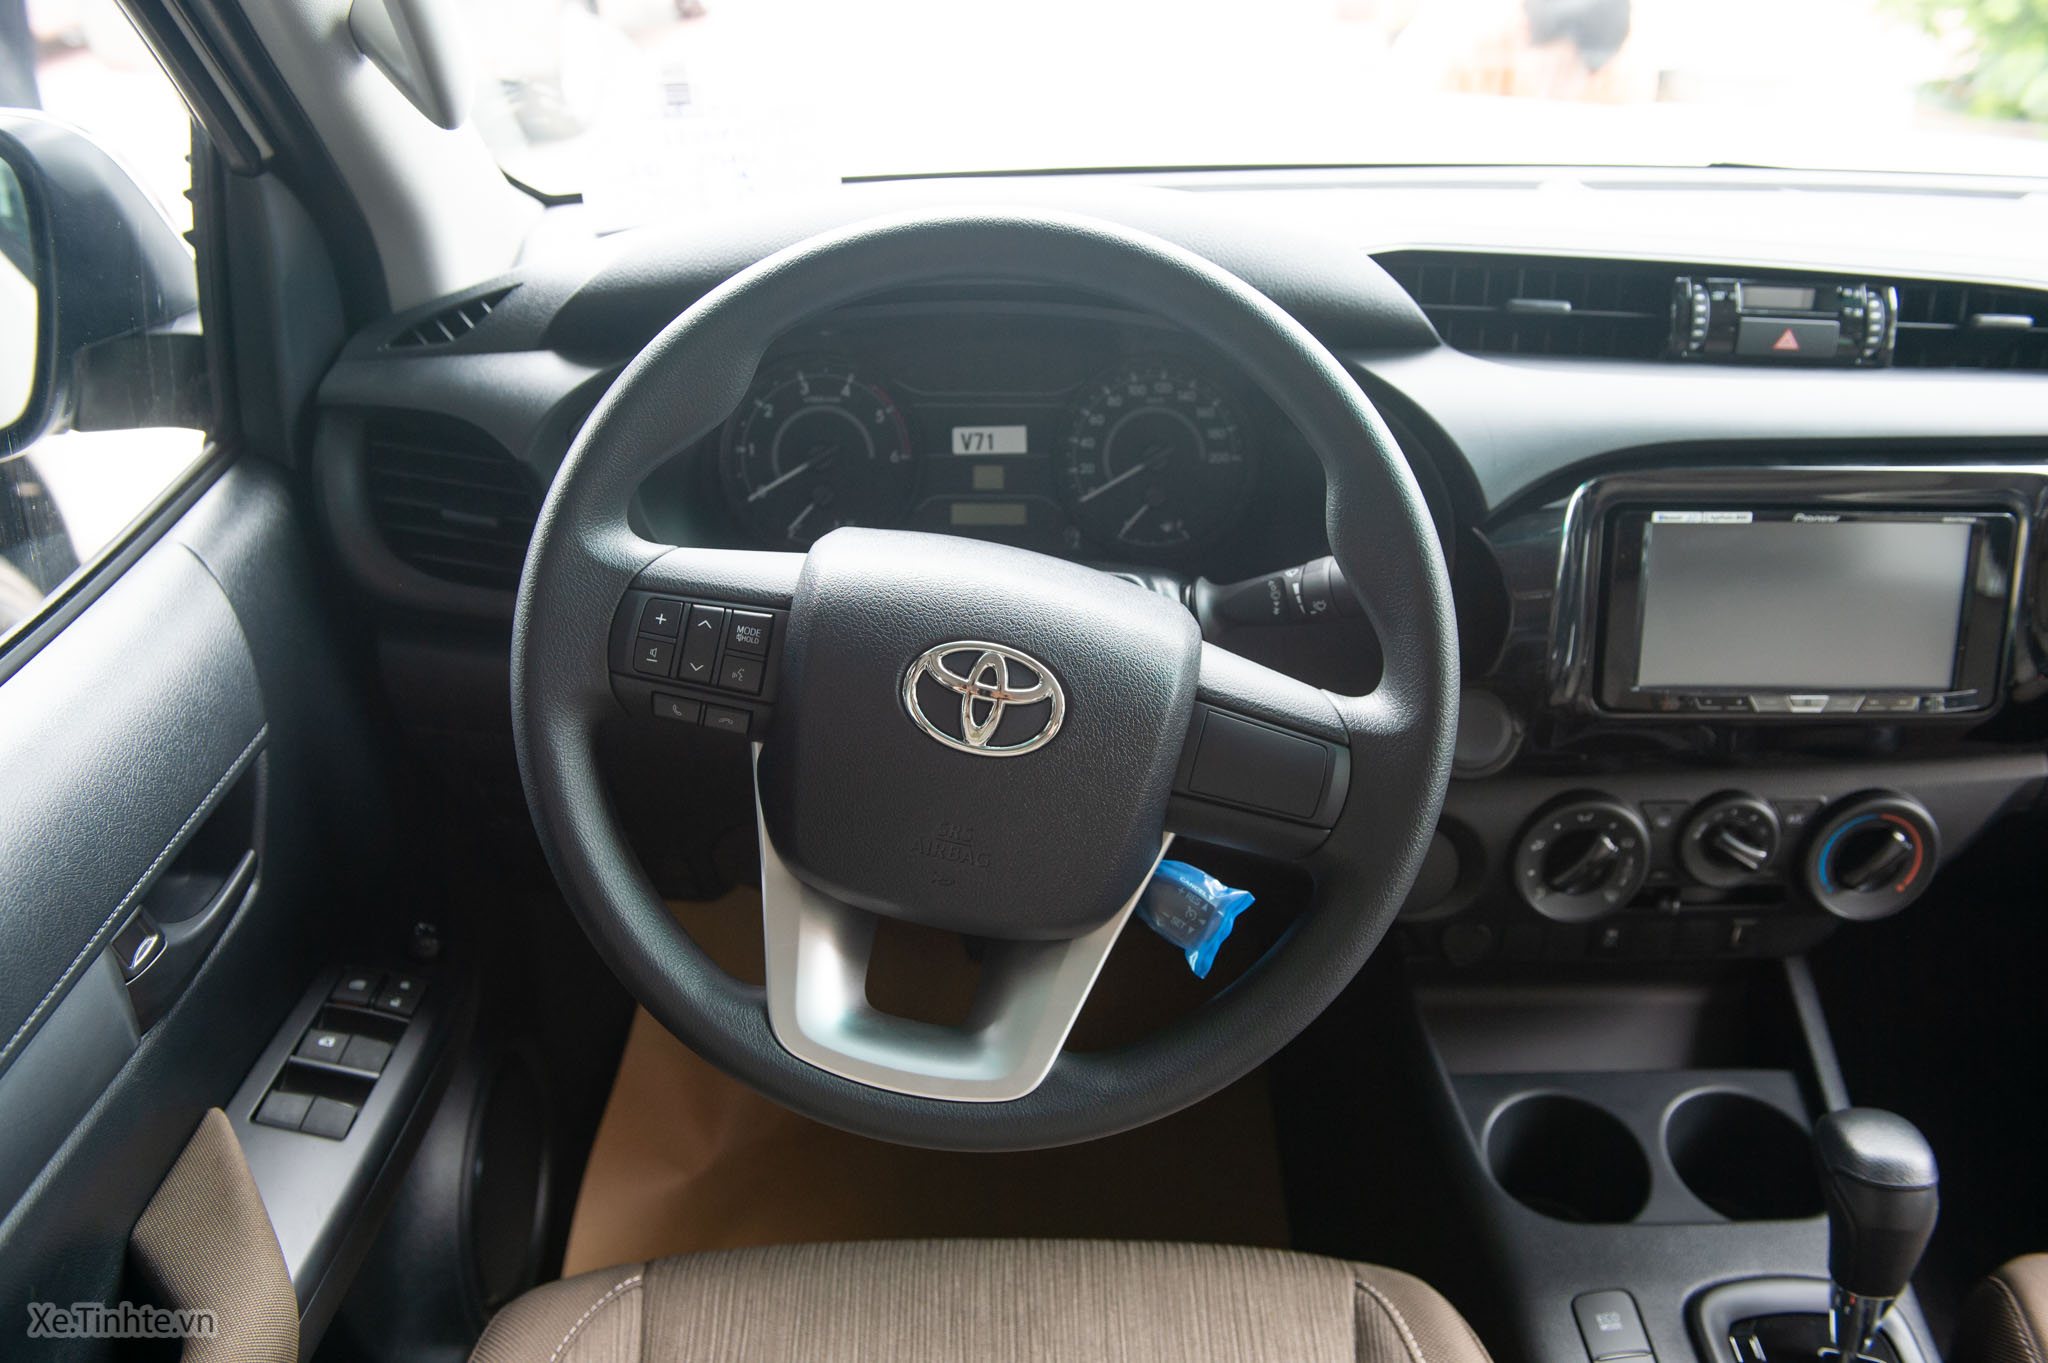 Toyota_Hilux 2018_Xe.tinhte.vn-3320.jpg